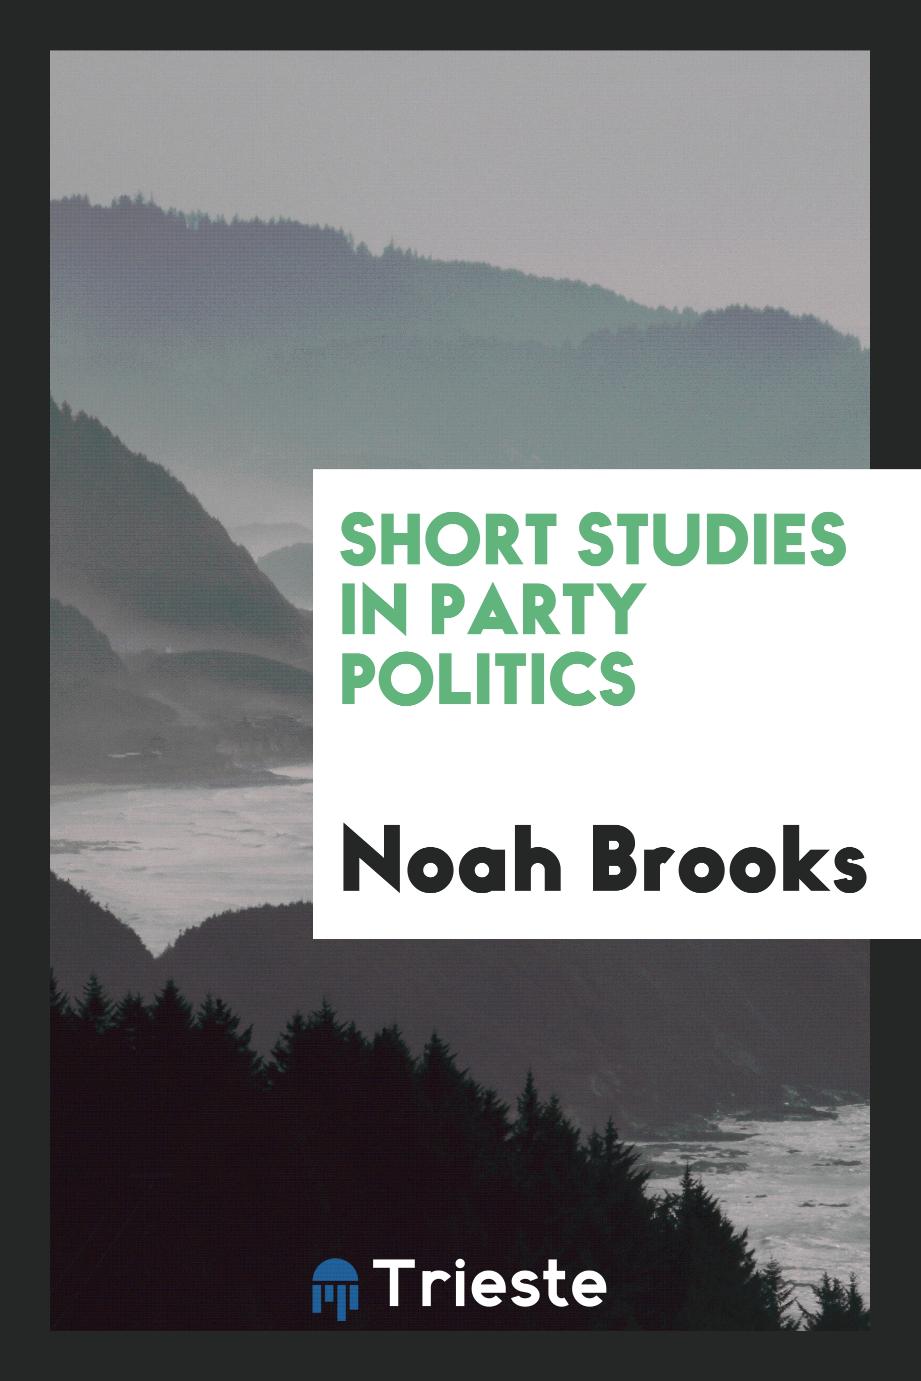 Short studies in party politics